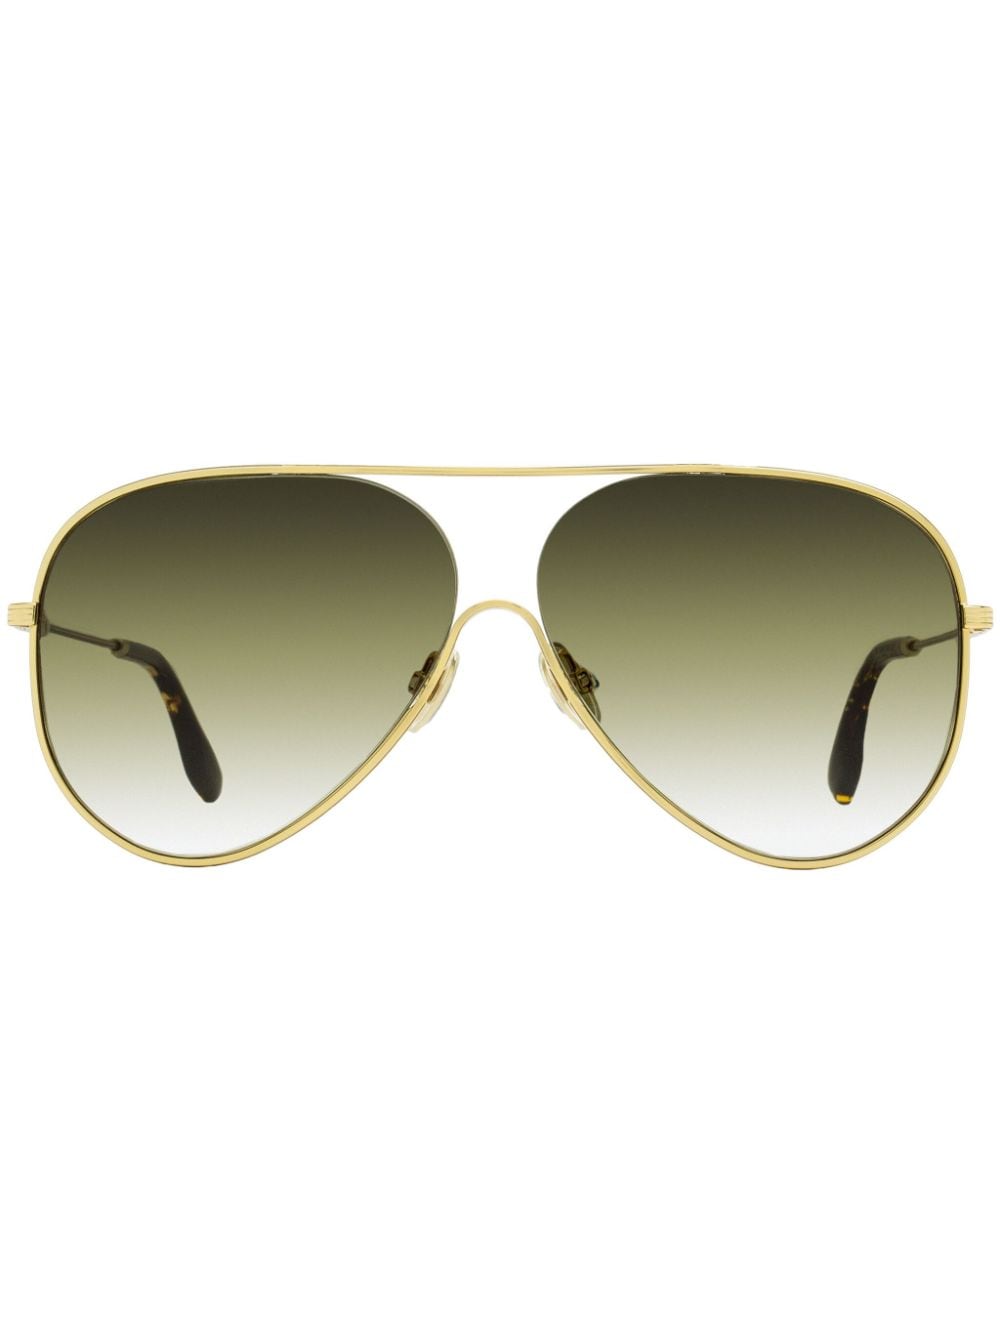 Victoria Beckham Eyewear VB 133 pilot-frame sunglasses - Gold